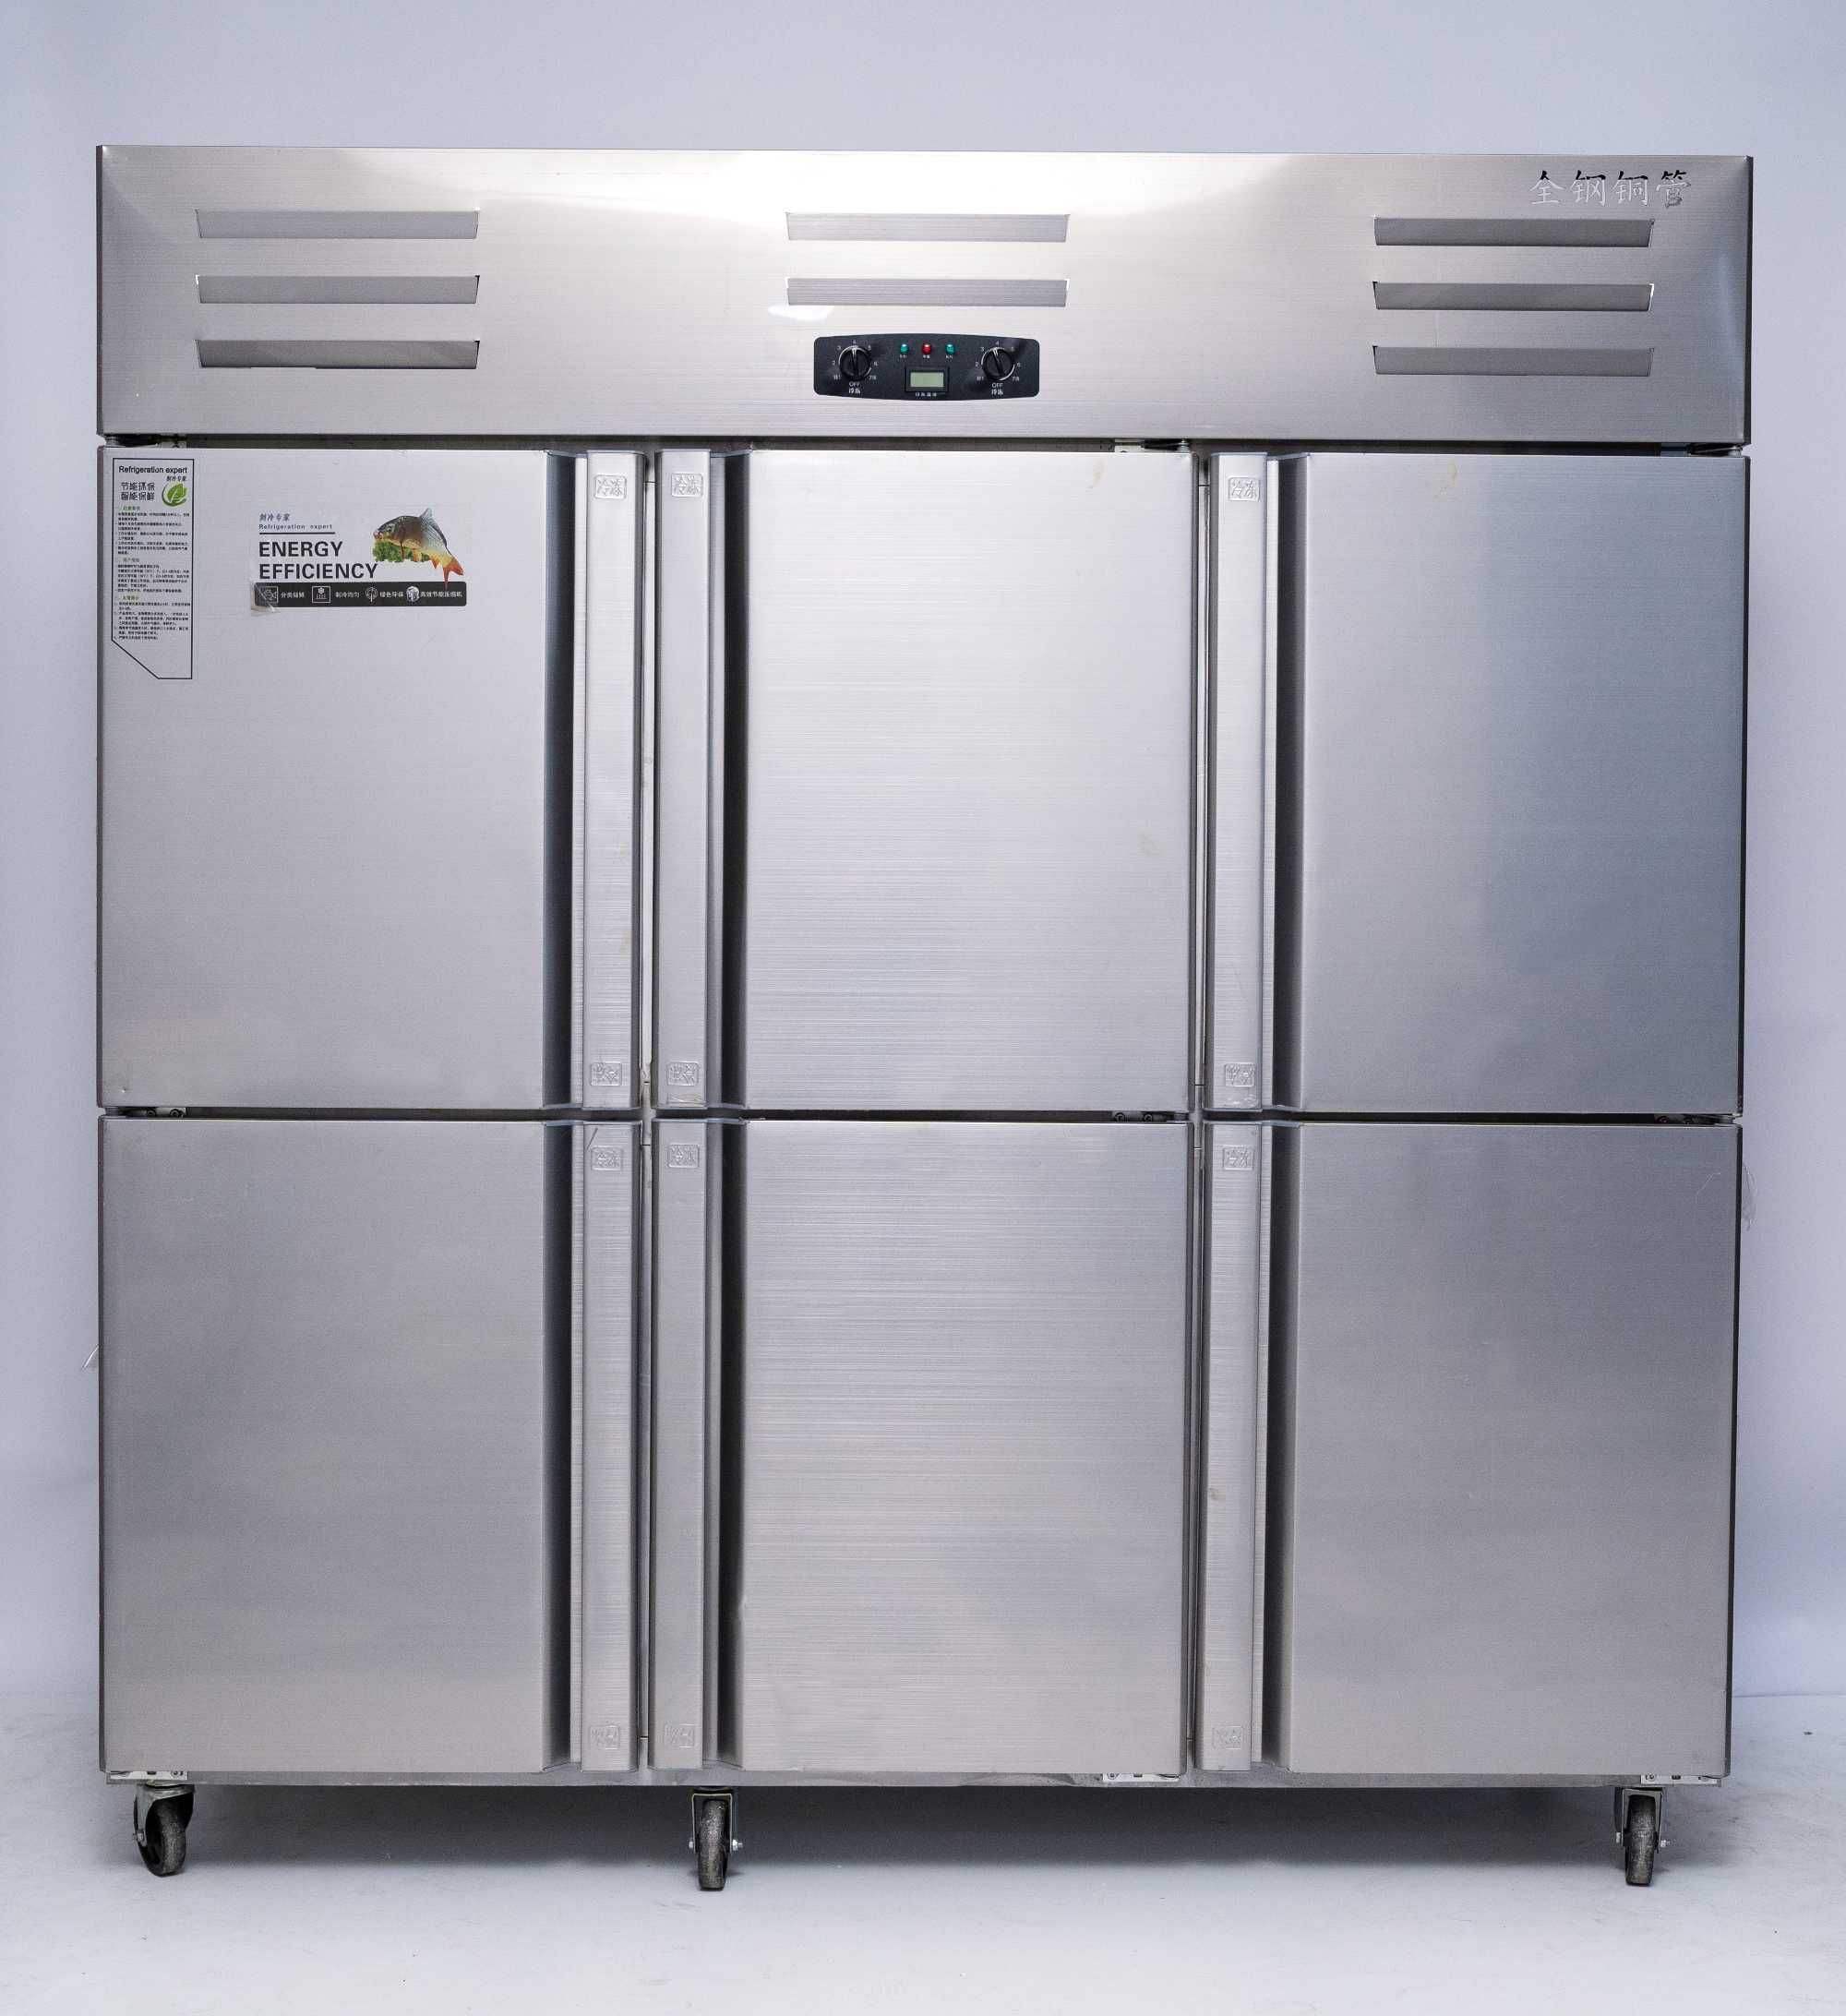 Морозильный шкаф CF-E4.